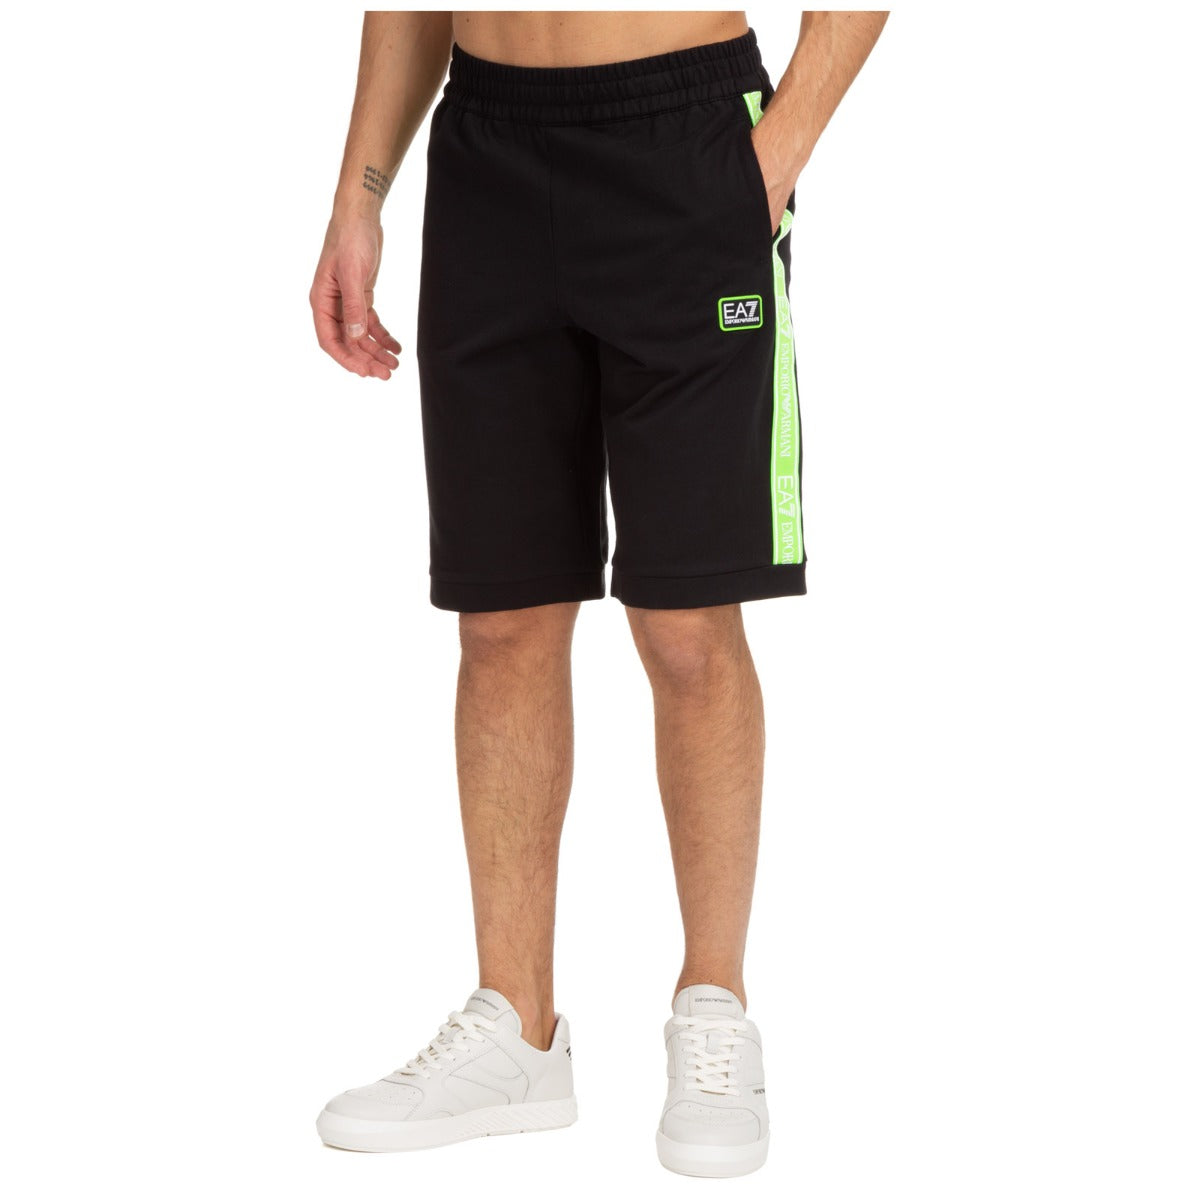 Emporio Armani EA7 Training Shorts - Black/Green